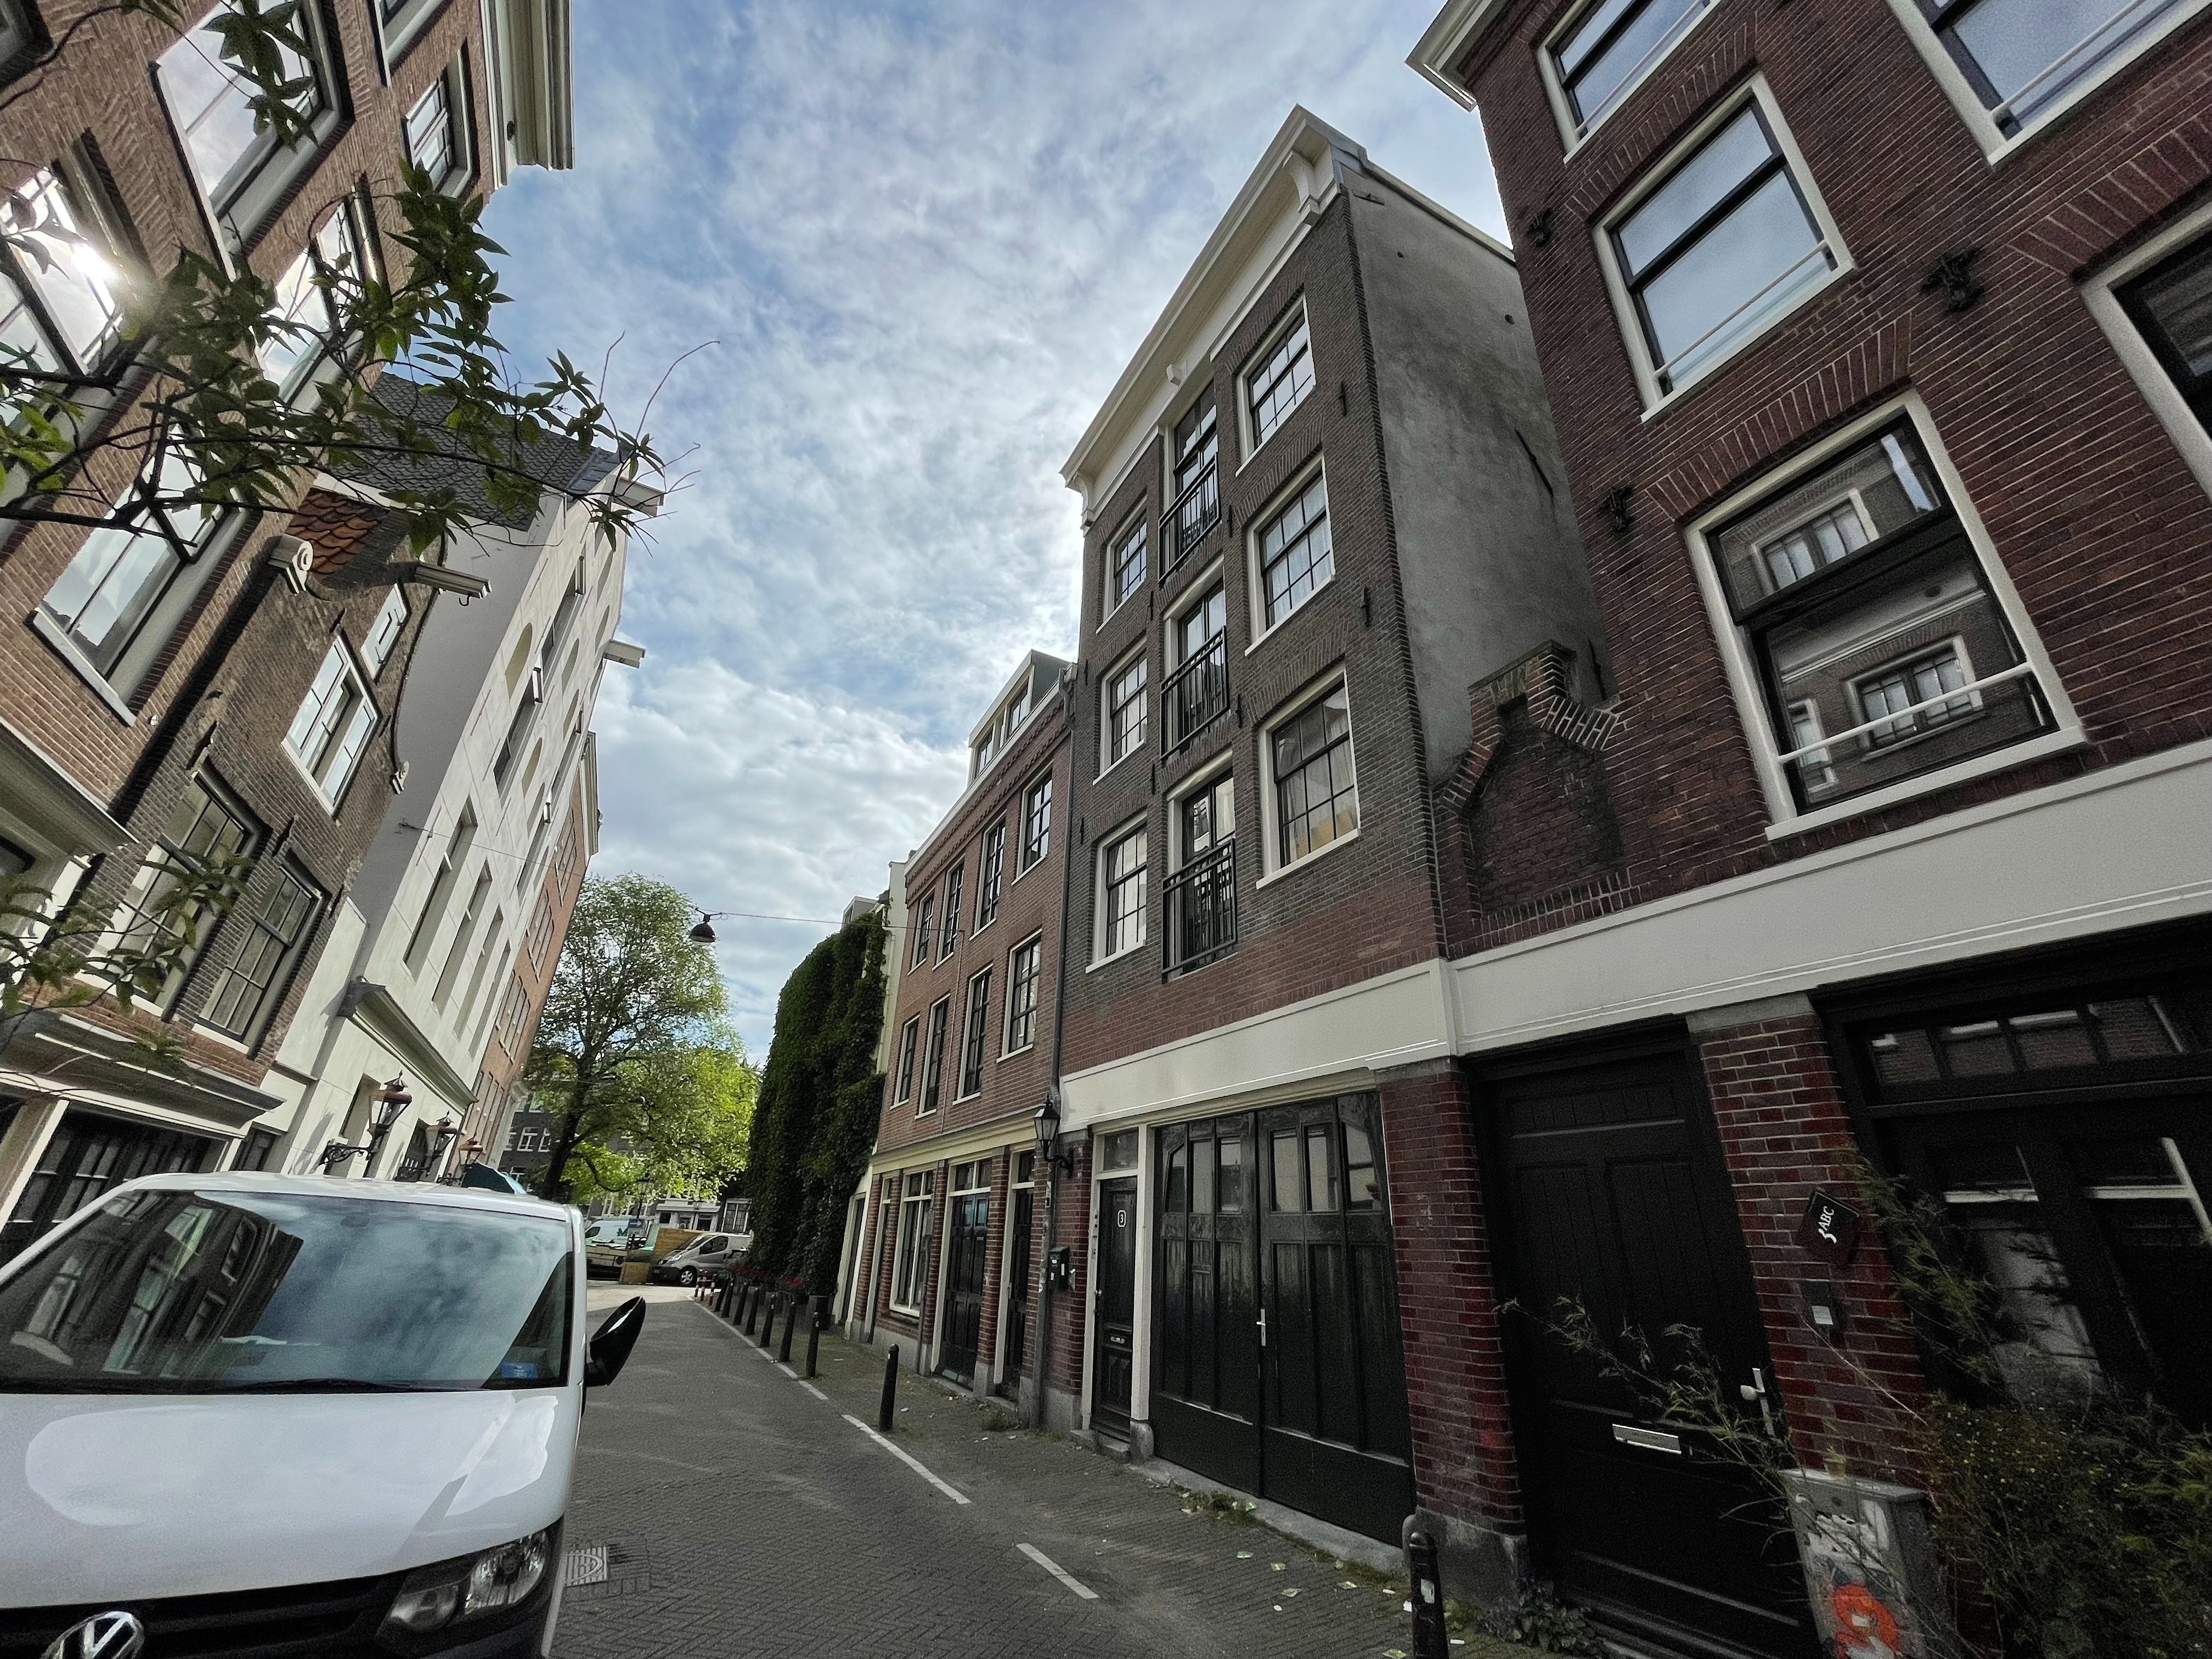 Woning / appartement - Amsterdam - Elandsstraat 3